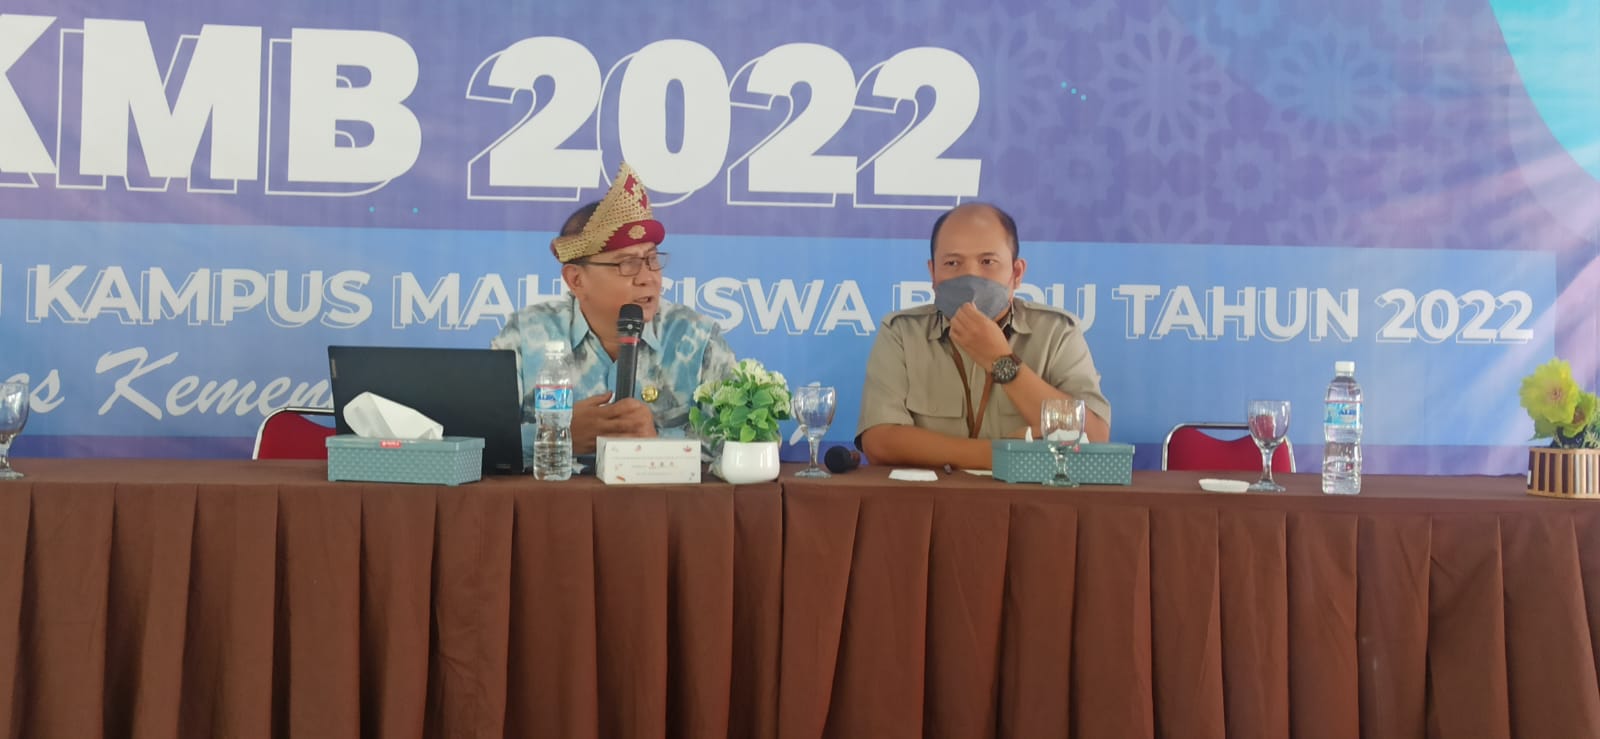 Pengenalan Kehidupan Kampus Bagi Mahasiswa Baru ( PKKMB ) Poltekkes Kemenkes Palembang Tahun 2022